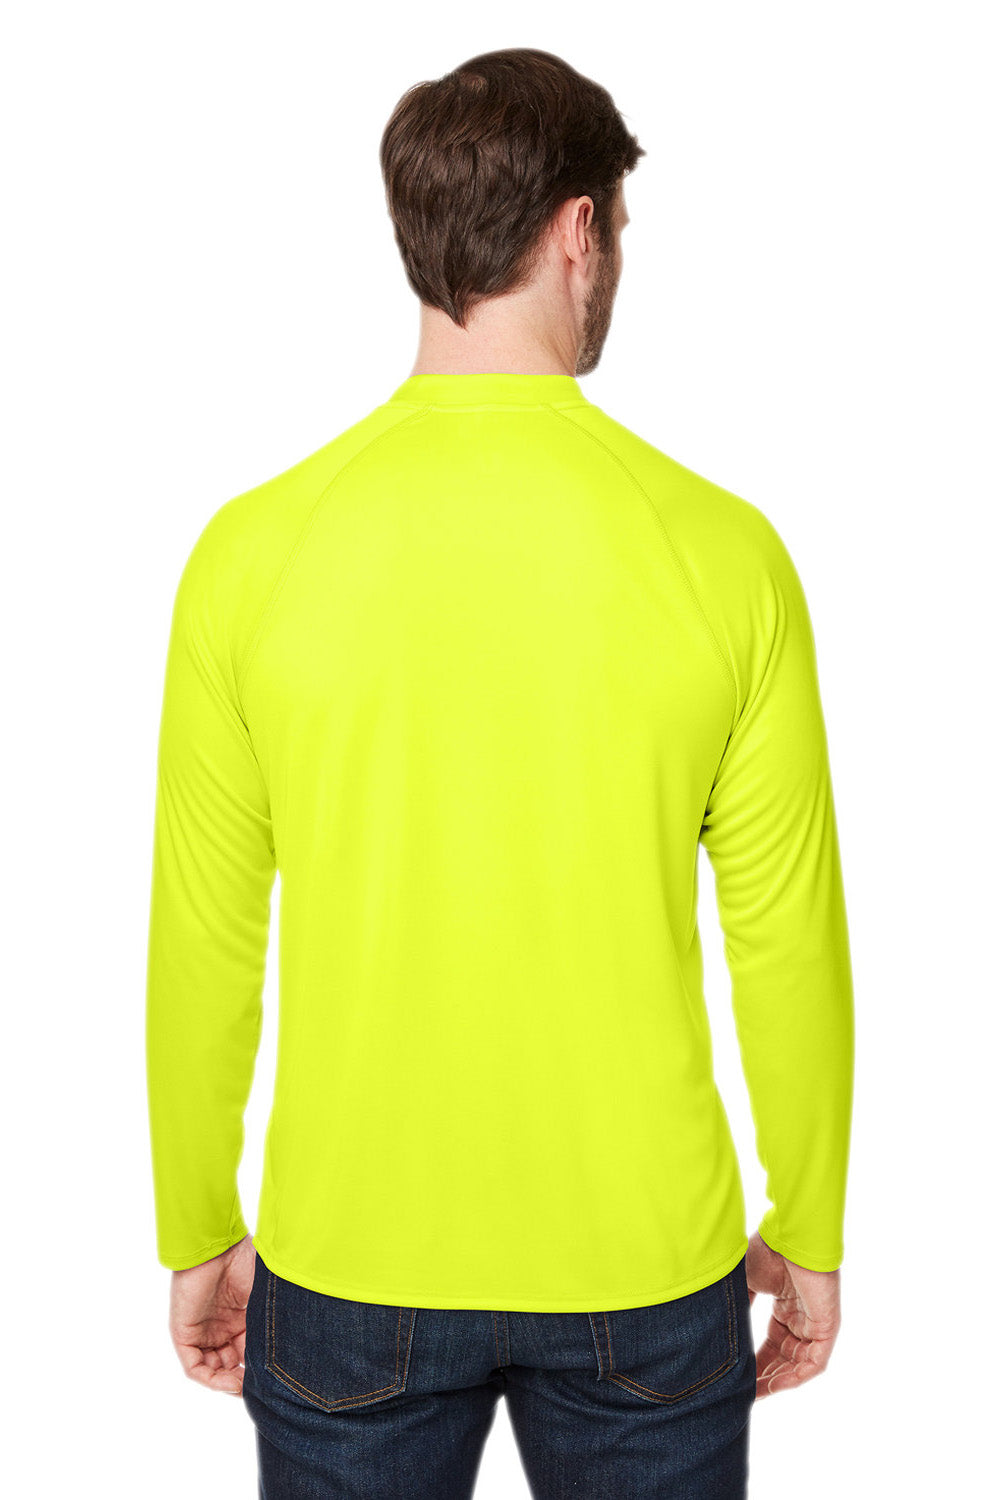 Core 365 CE110 Mens Ultra MVP Raglan Long Sleeve T-Shirt Safety Yellow Back